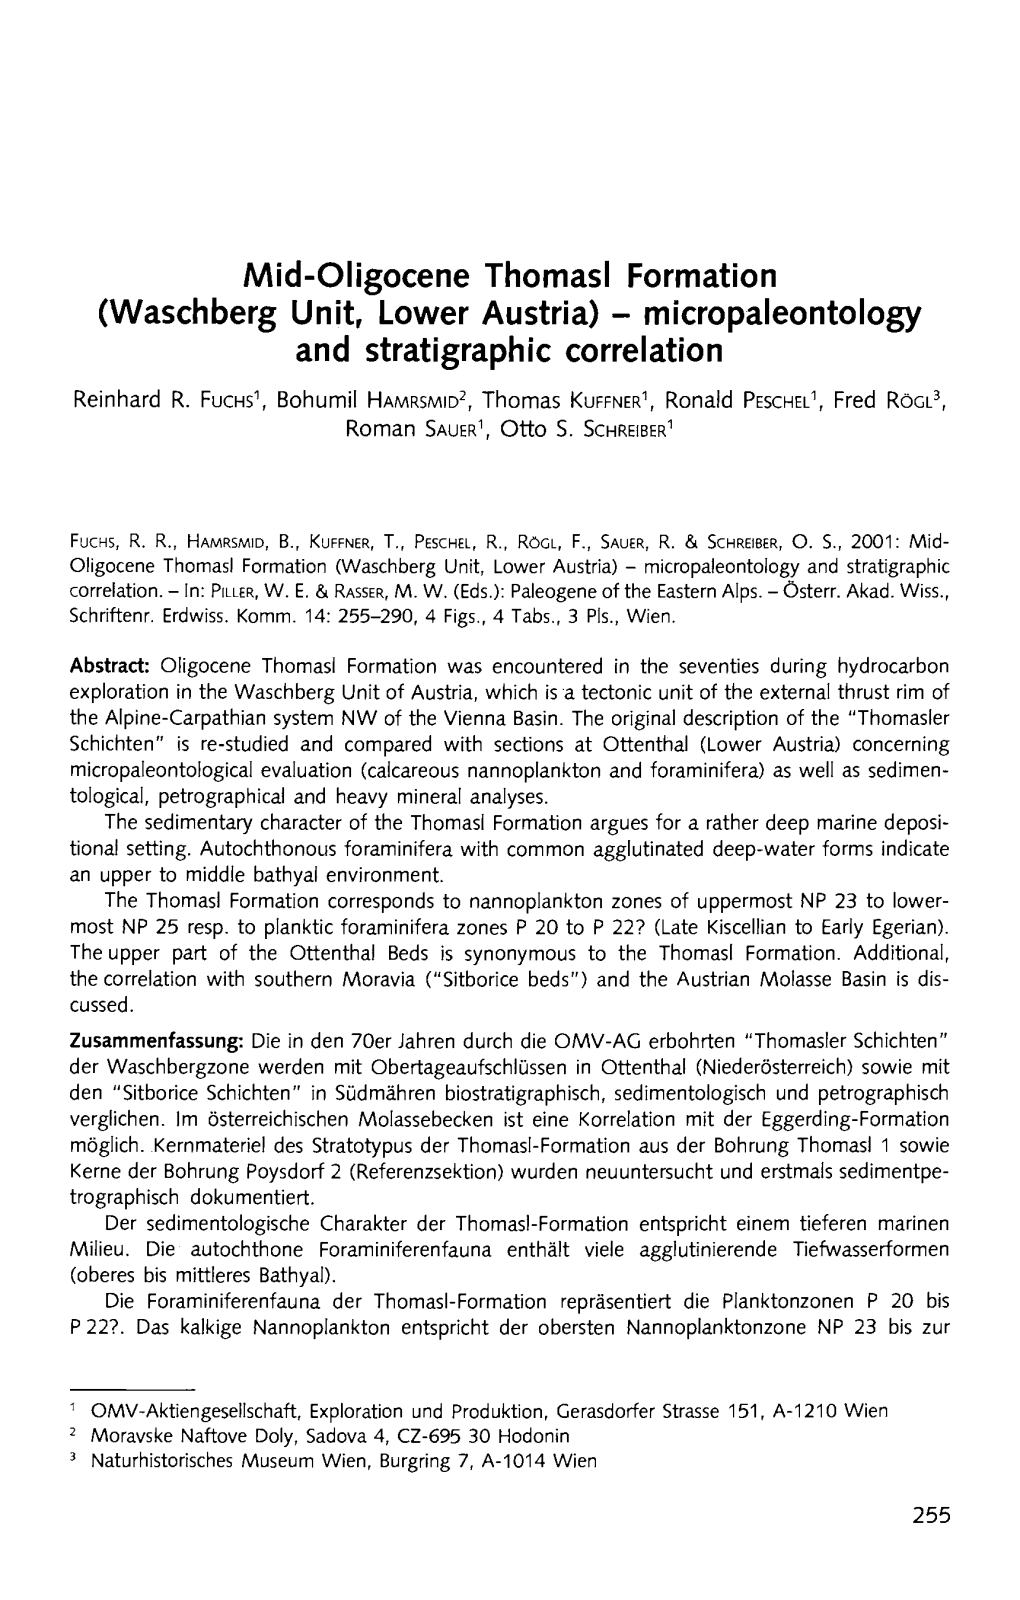 Mid-Oligocene Thomasl Formation (Waschberg Unit, Lower Austria) - Micropaleontology and Stratigraphic Correlation